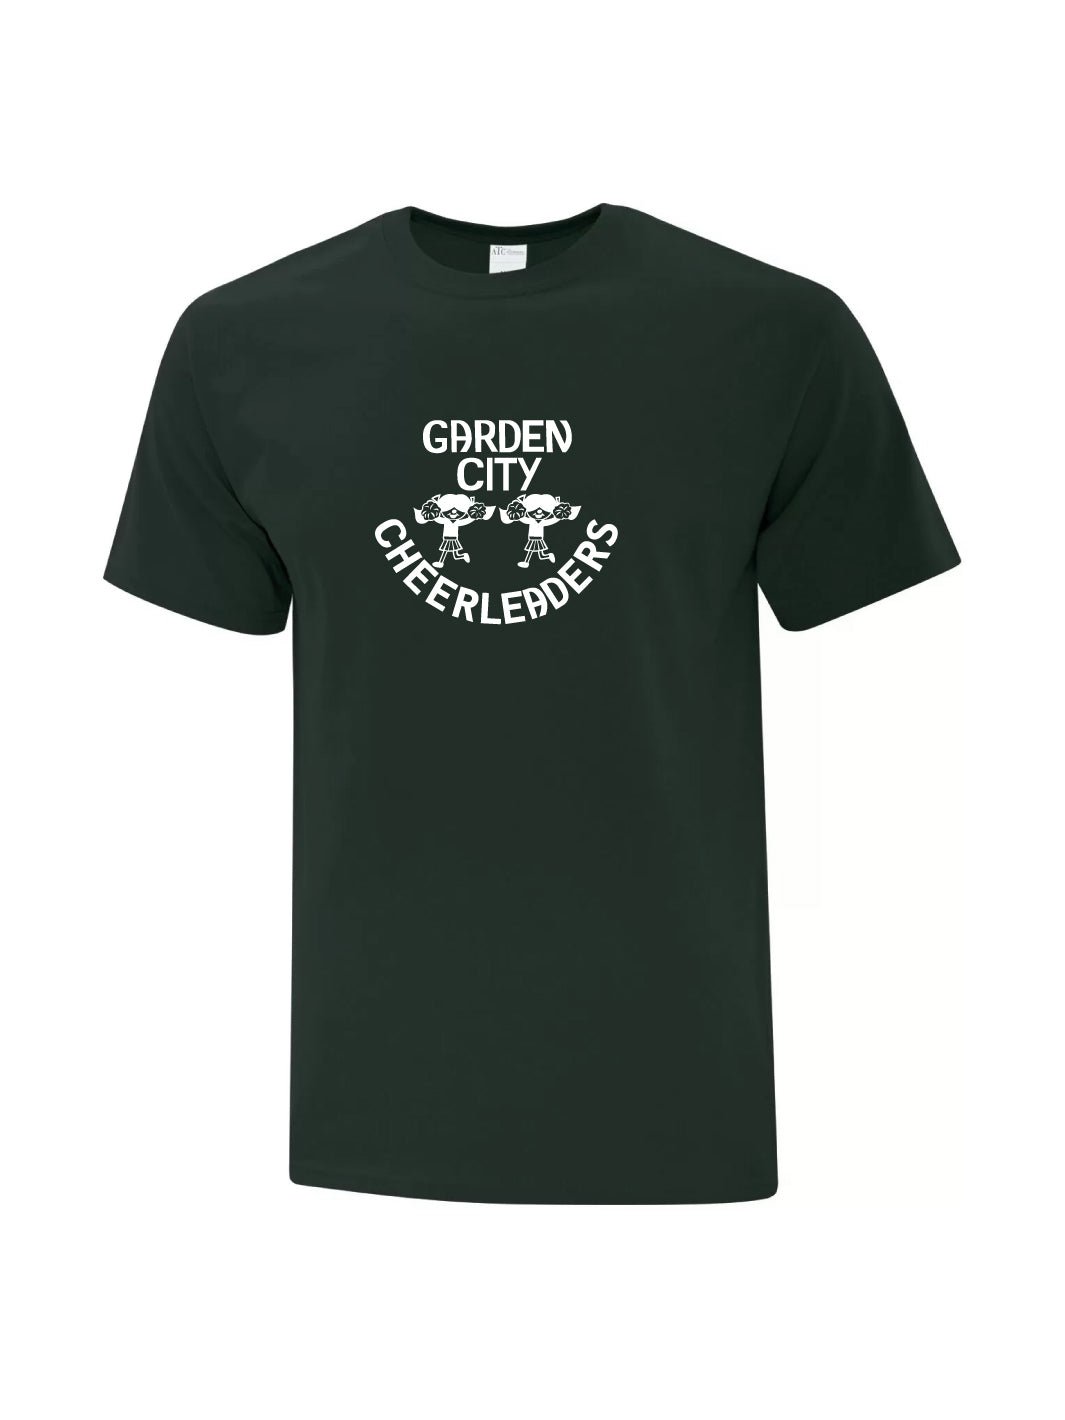 Adult Garden City Cheerleaders T-shirt - Oddball Workshop